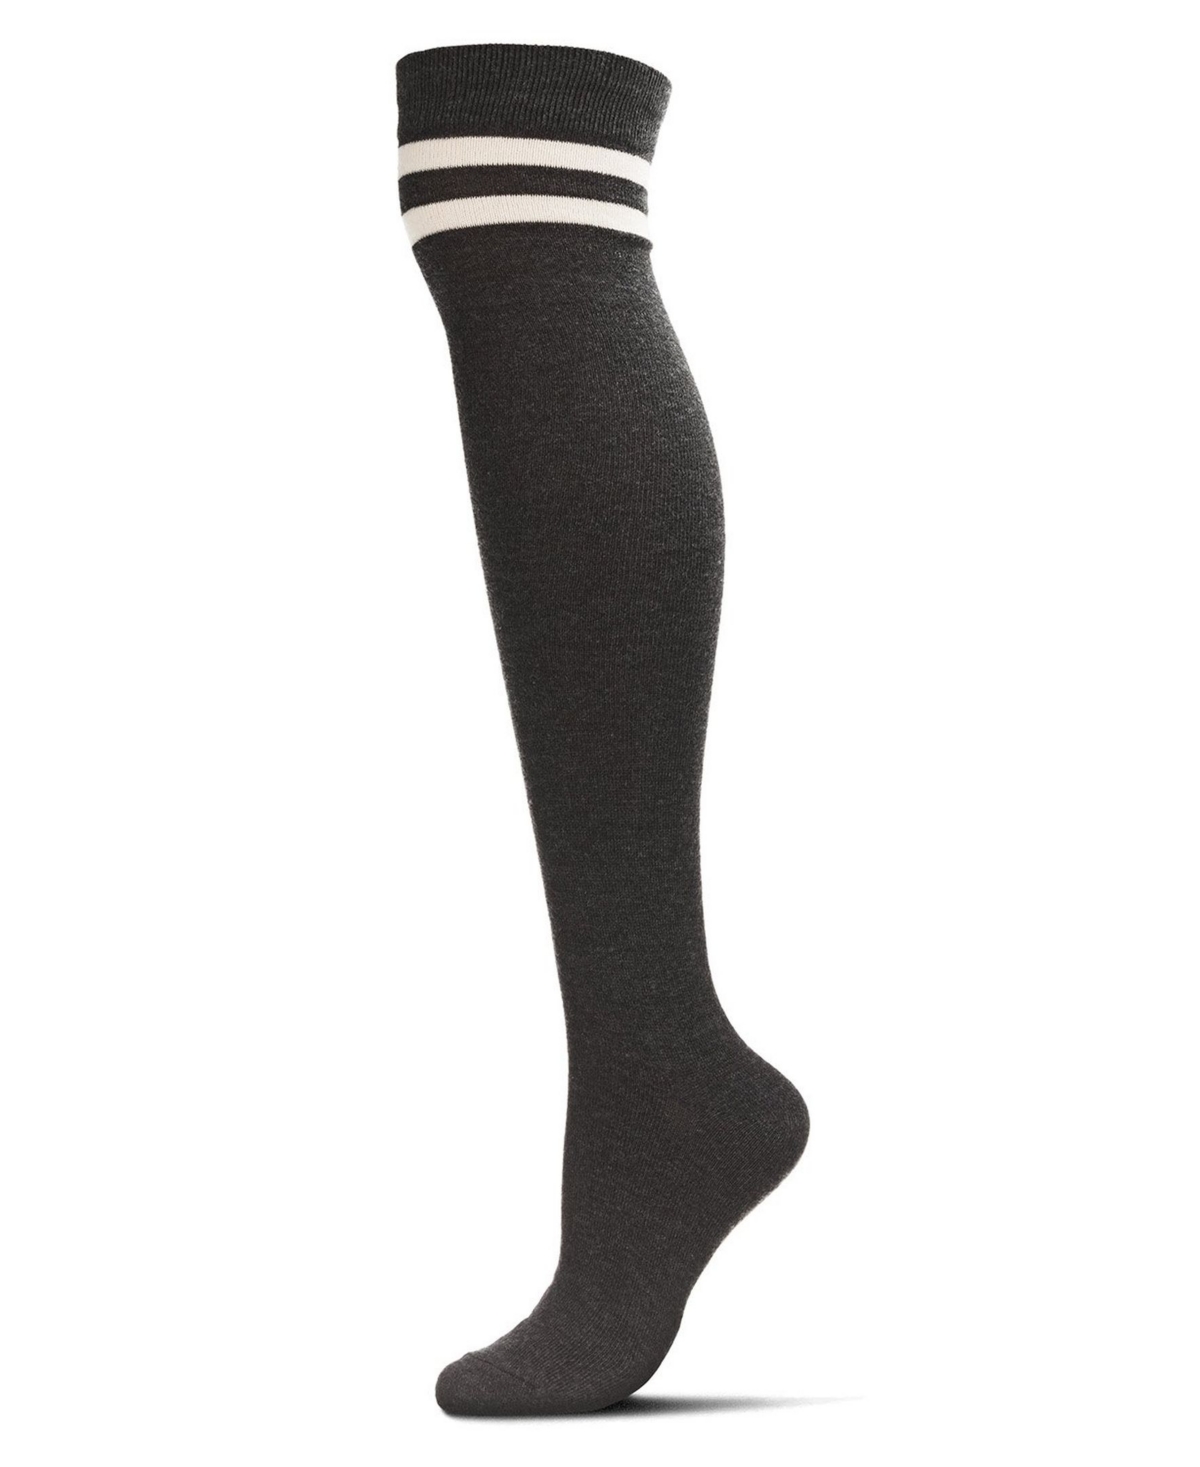 Women's Top Stripe Cashmere Blend Over The Knee Warm Socks - Winter White